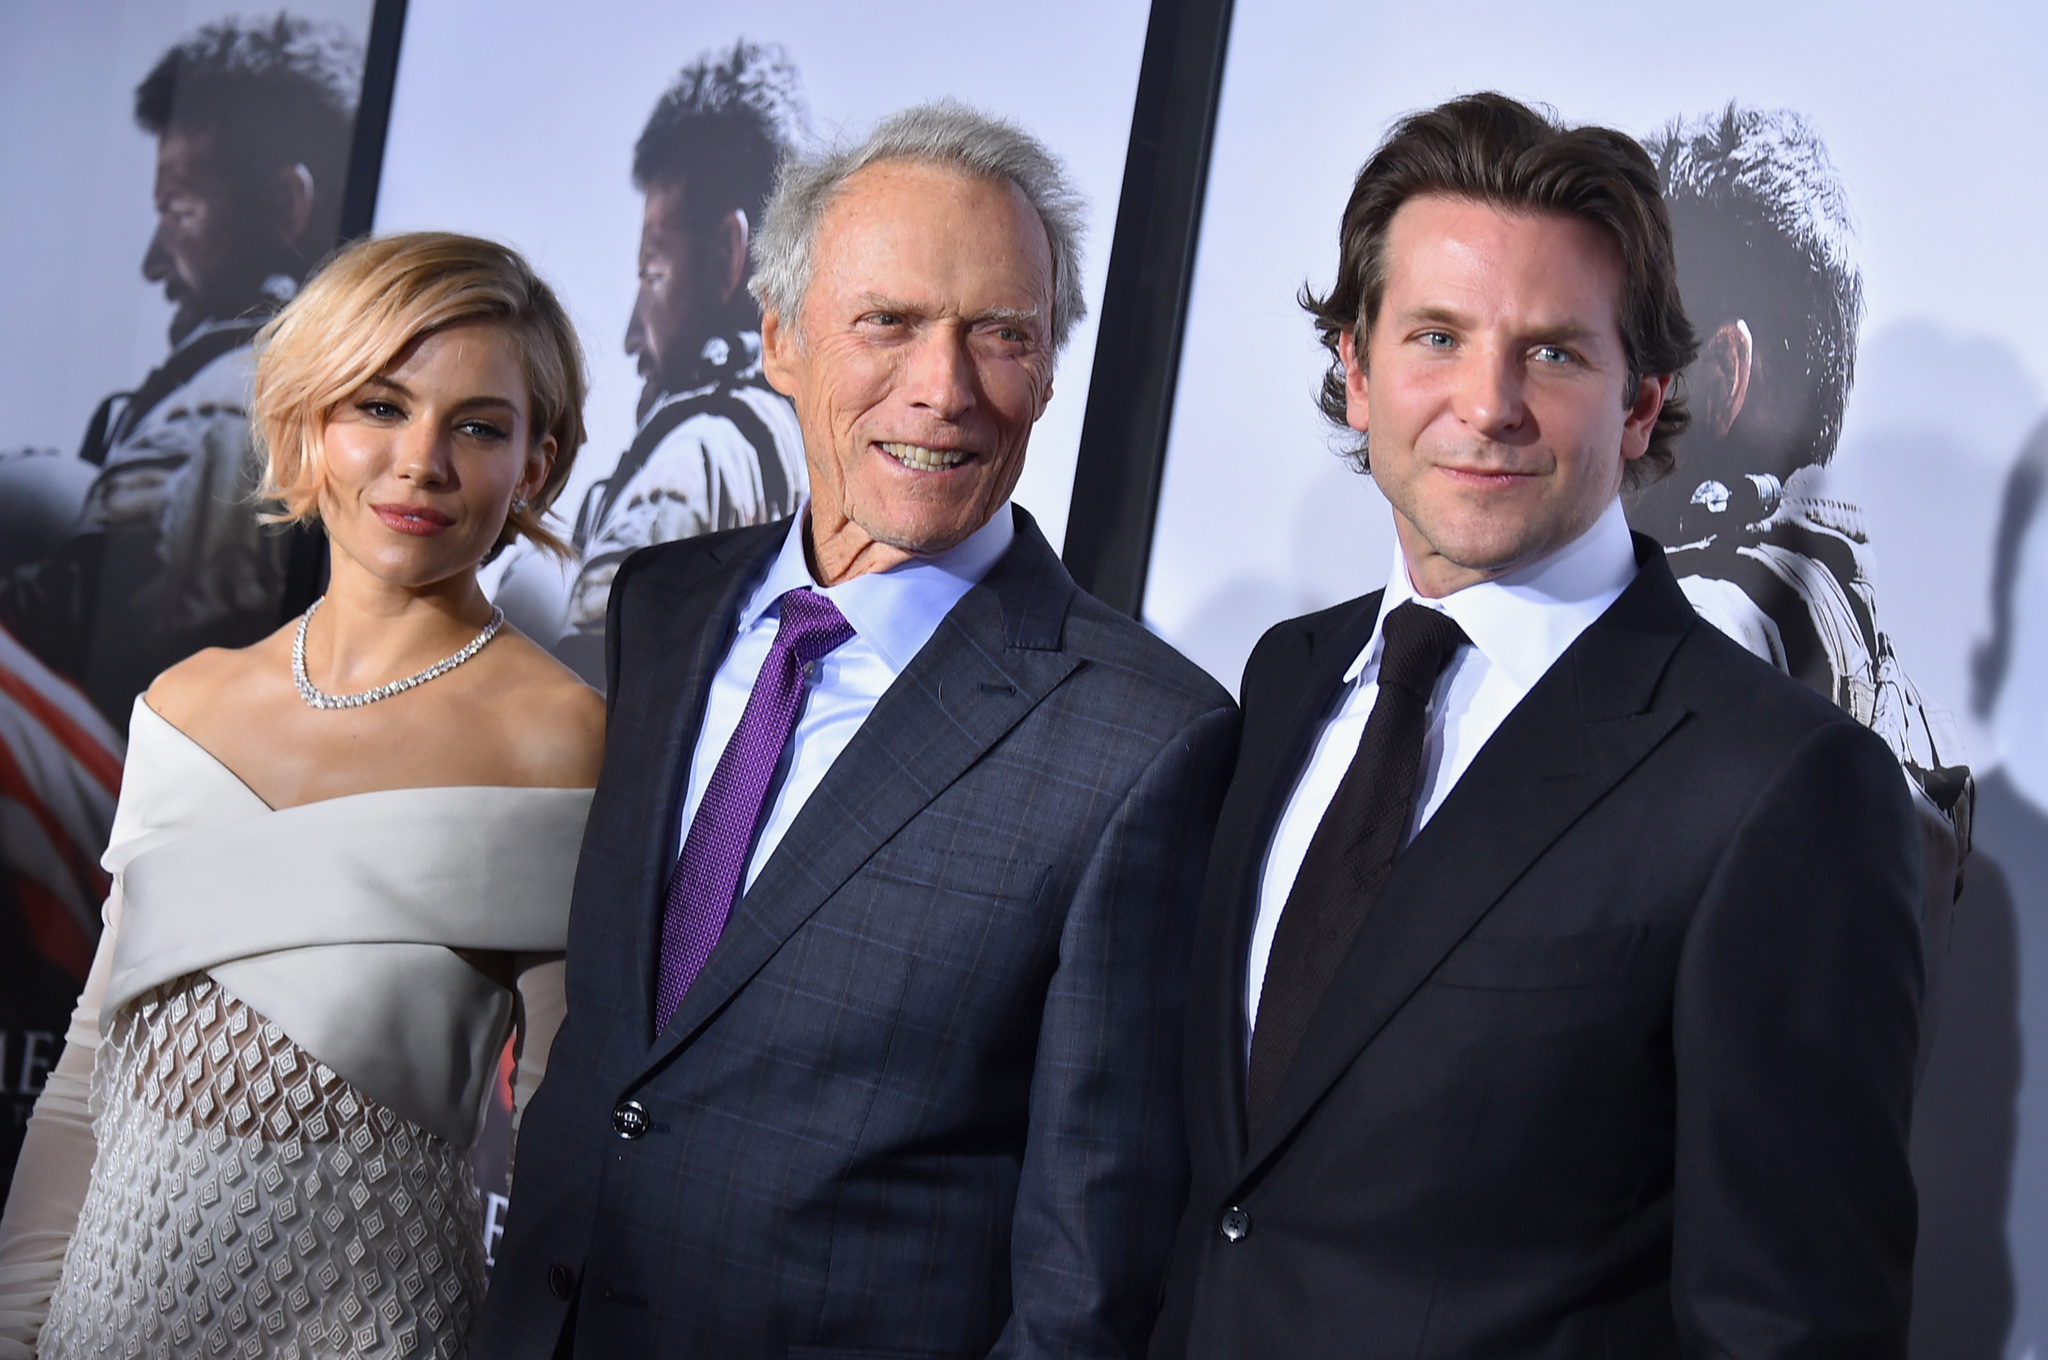 Clint Eastwood, Bradley Cooper and Sienna Miller at event of Amerikieciu snaiperis (2014)